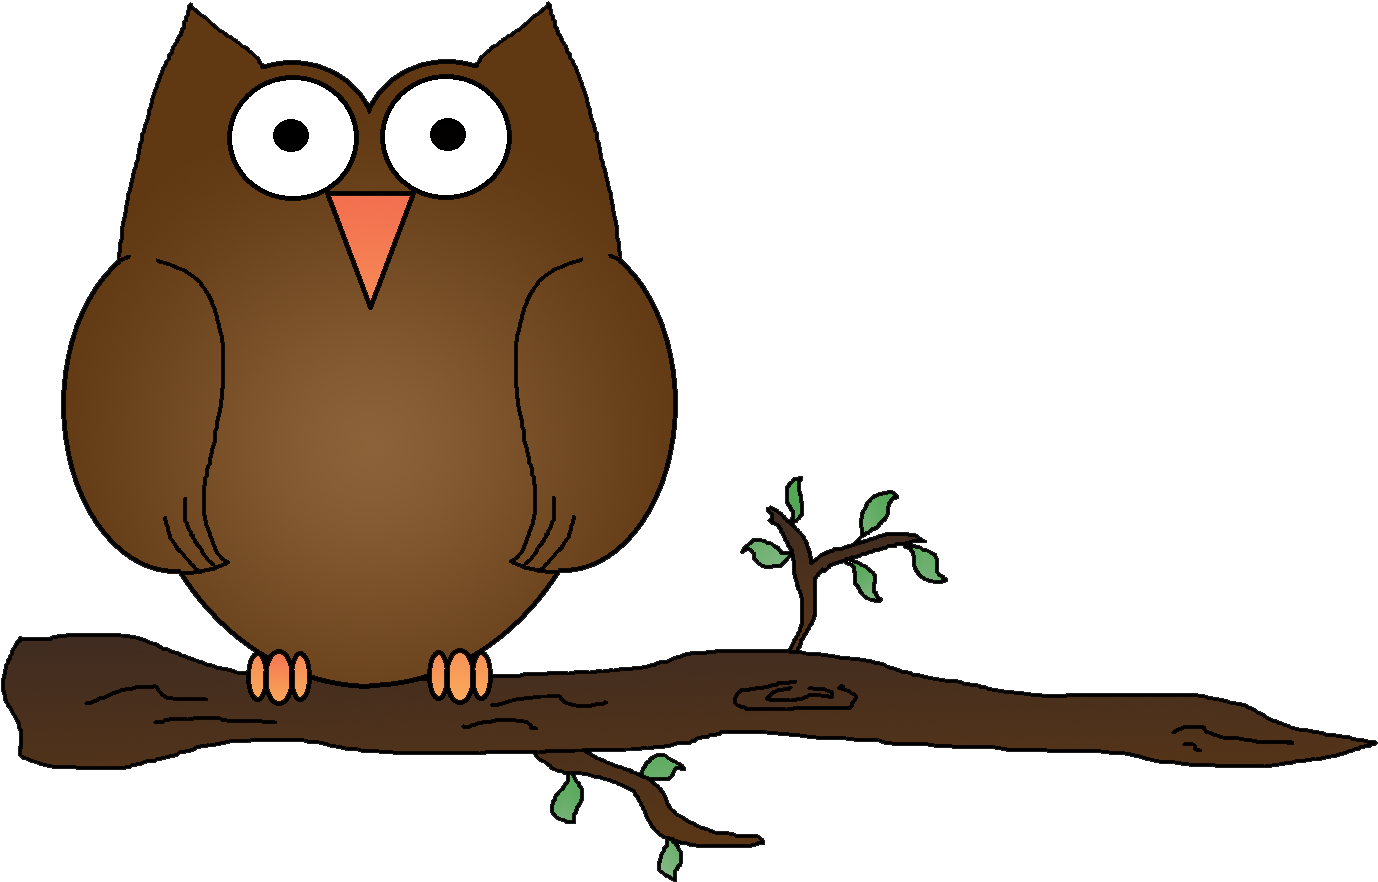 Free Owl Clipart Transparent Download Free Owl Clipart Transparent Png